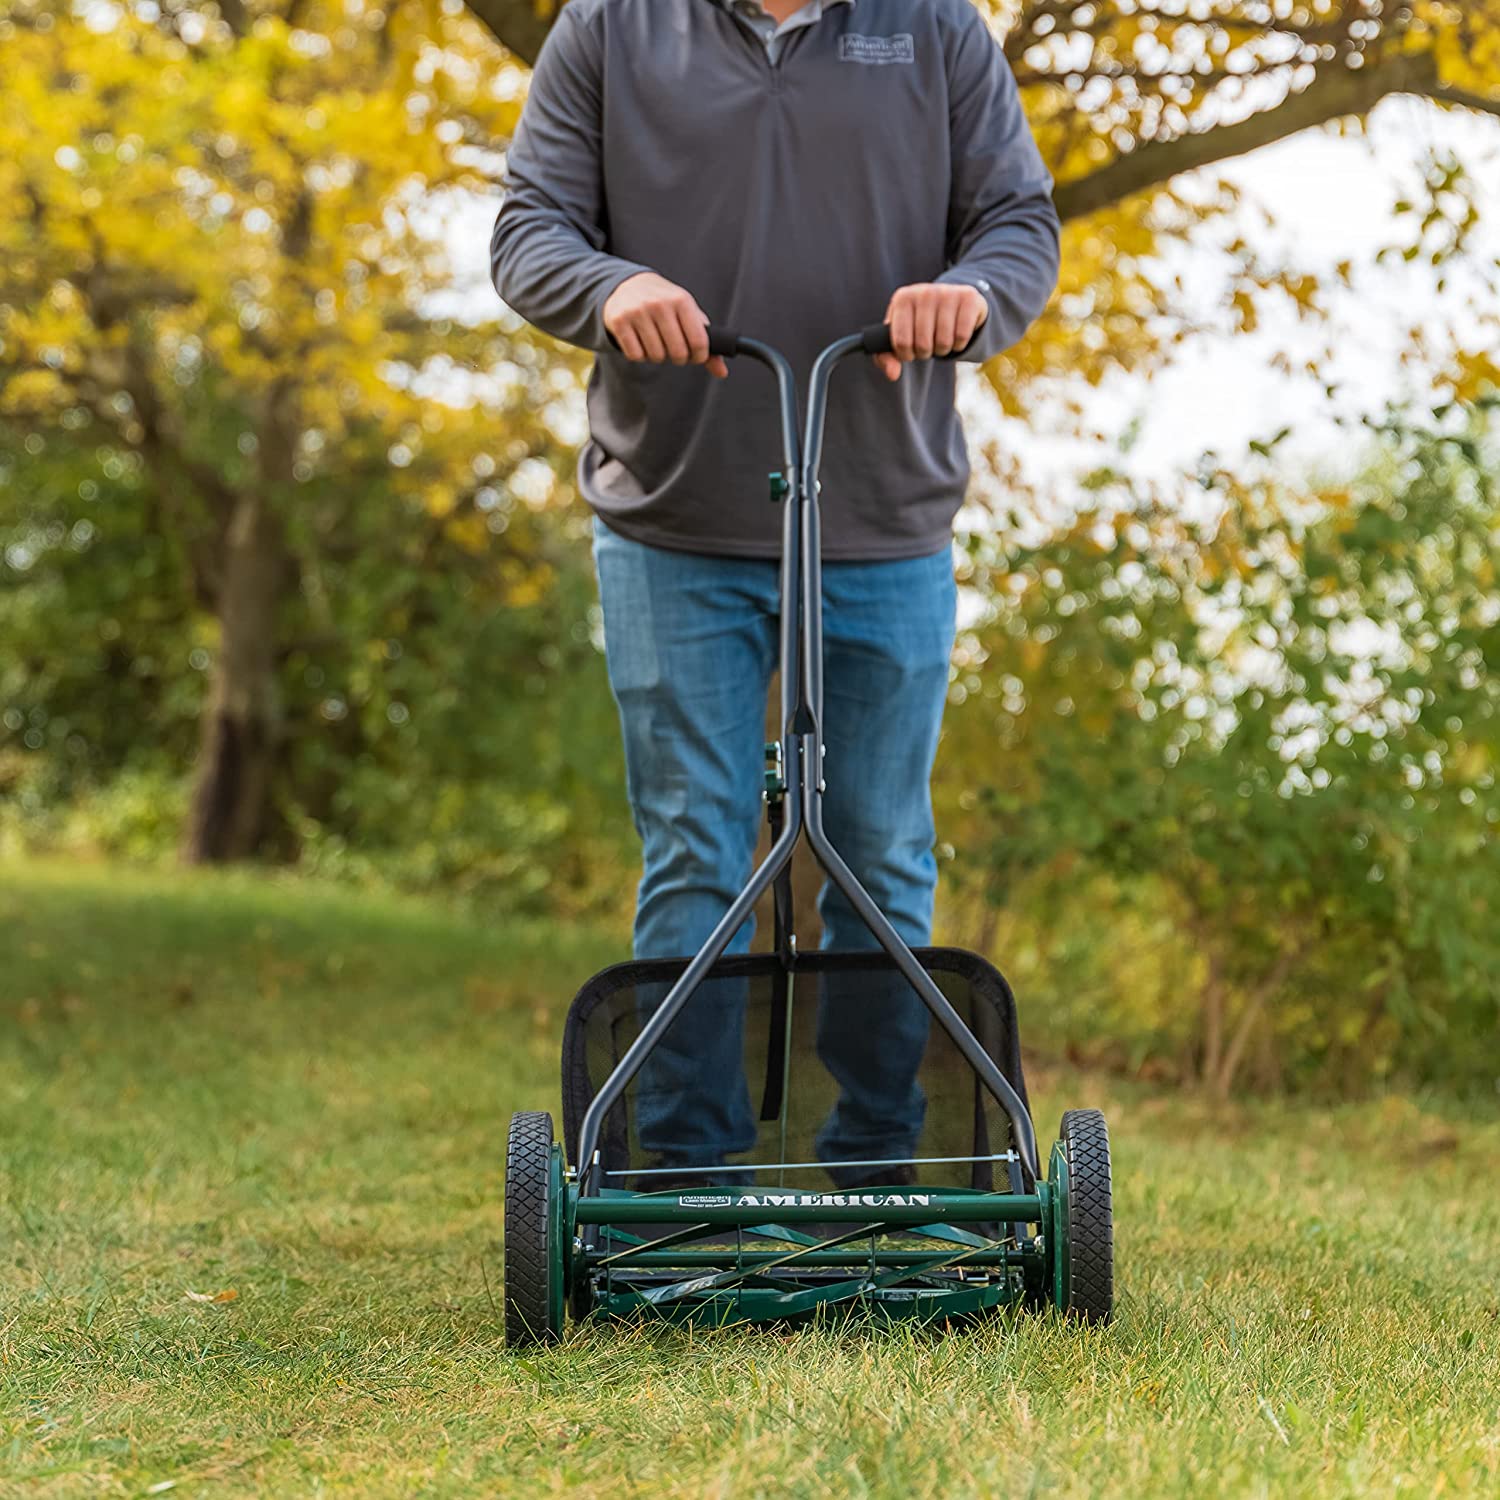 https://bigbigmart.com/wp-content/uploads/2023/05/American-Lawn-Mower-Company-1725-16GC-16-inch-7-Blade-Reel-Mower-with-Grass-Catcher-Specialty-Grass-Mower-Green4.jpg